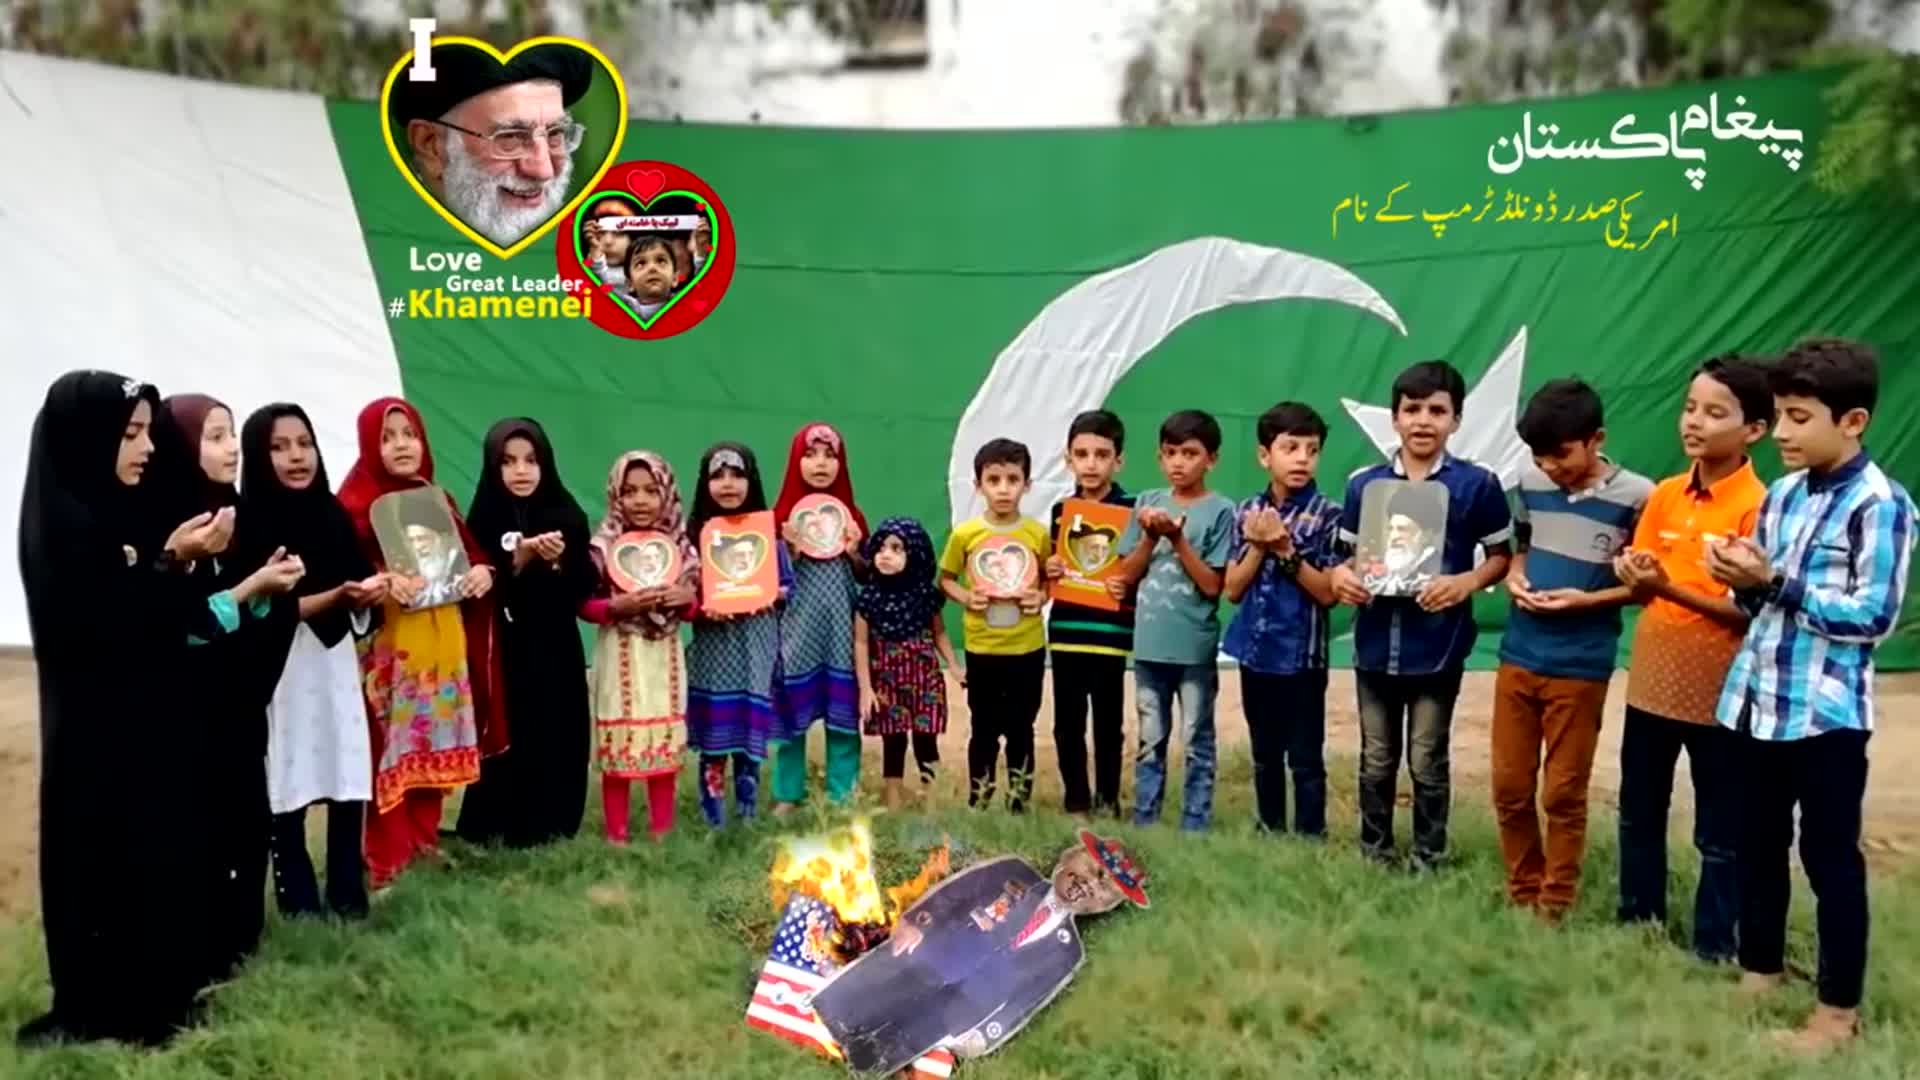 Msg from Pakistan We Love Imam Ali Khamenei | پاکستان کے عاشقان رہبر علی خامنہ ای کے نام پیغام